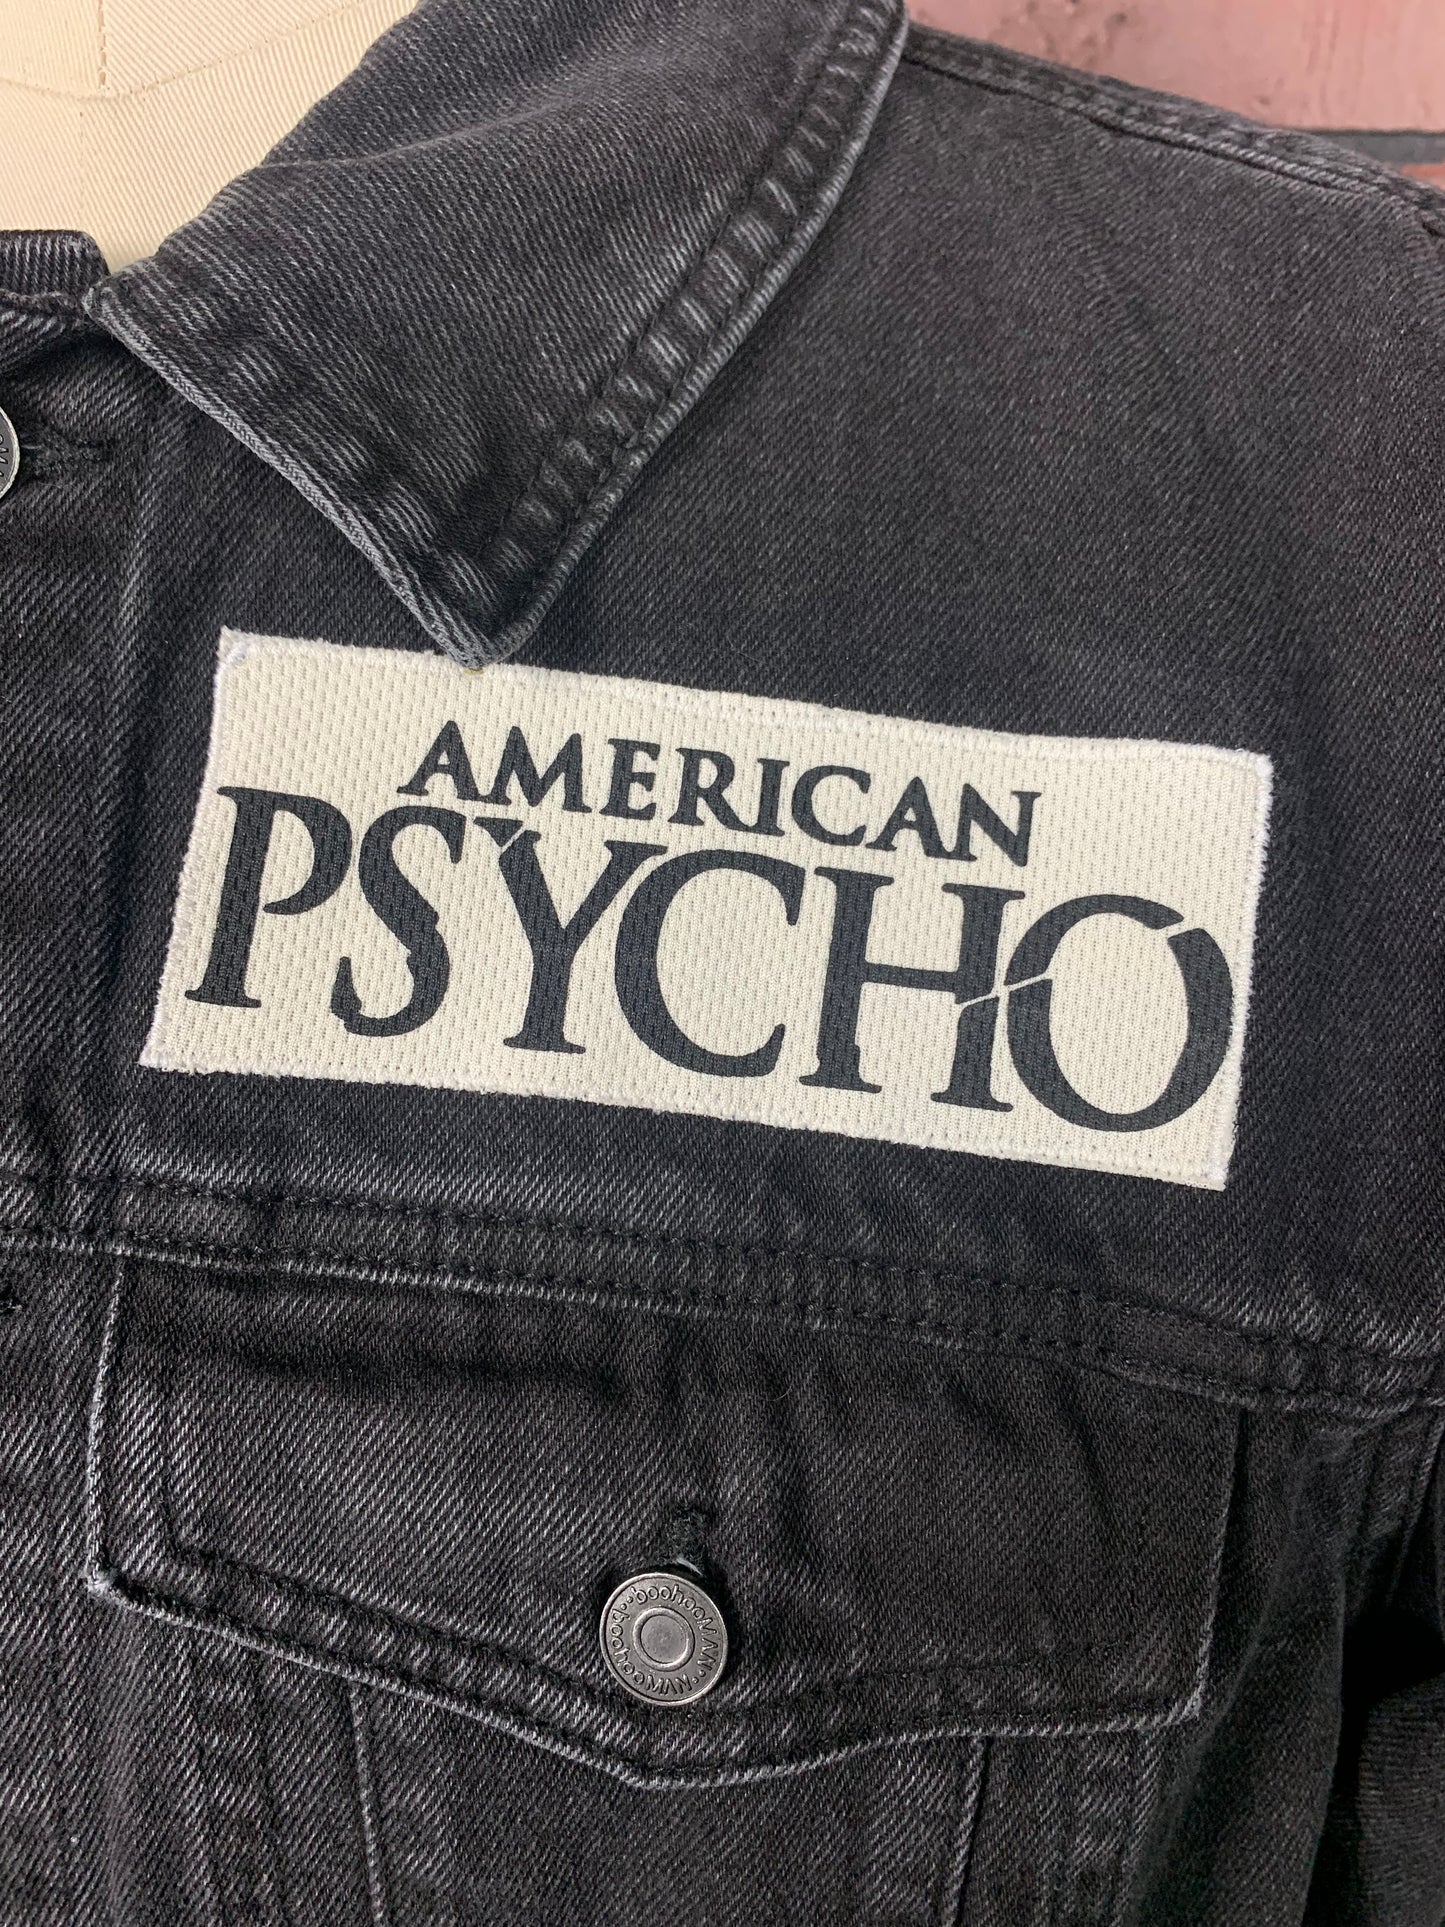 American Psycho Jean Jacket Custom Rework L